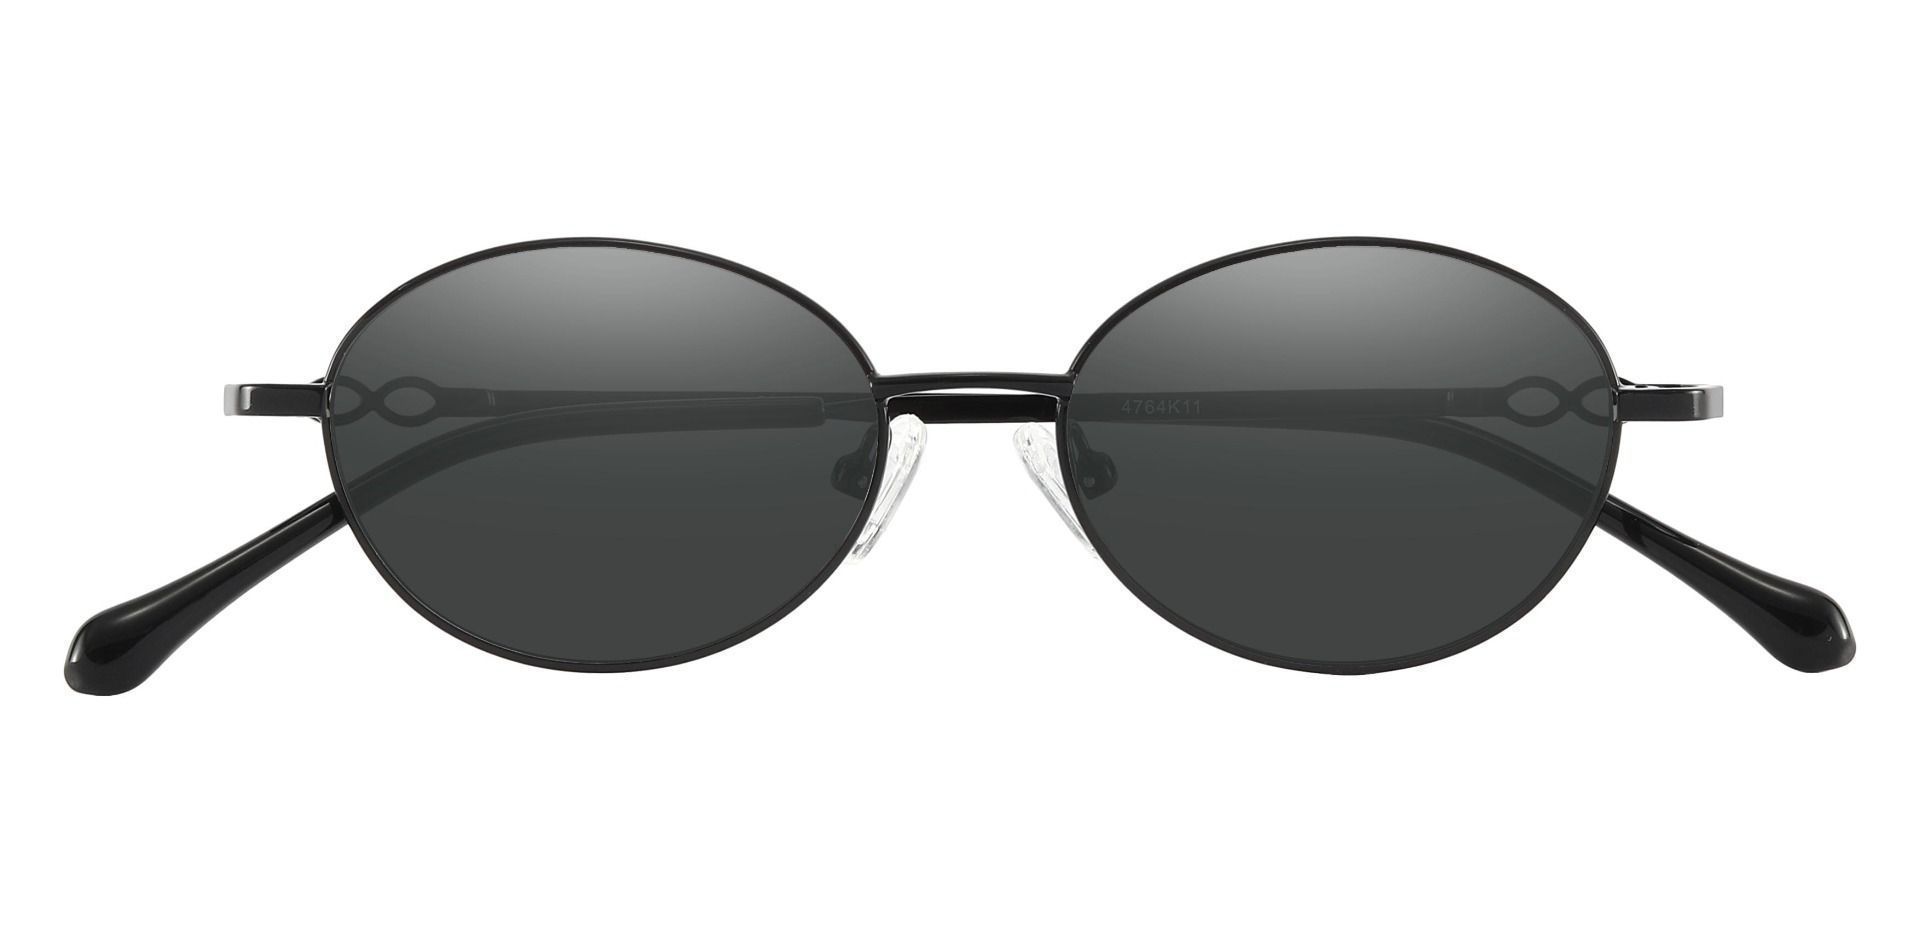 Odyssey Oval Progressive Sunglasses - Black Frame With Gray Lenses